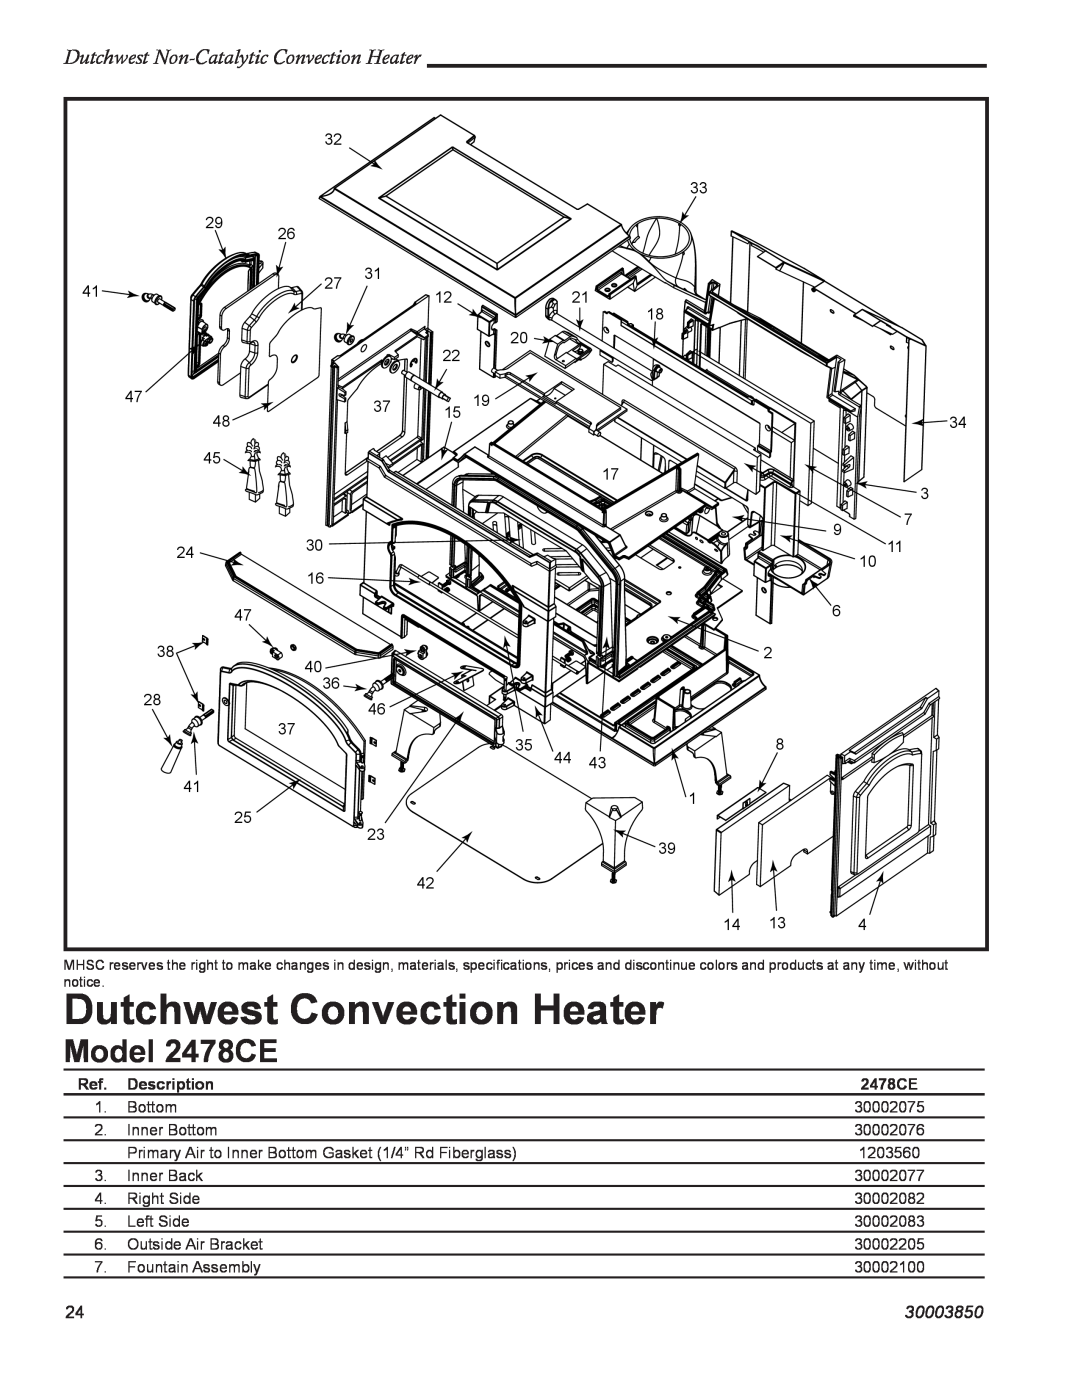 Vermont Casting manual Dutchwest Convection Heater, Model 2478CE, Dutchwest Non-CatalyticConvection Heater, 30003850 